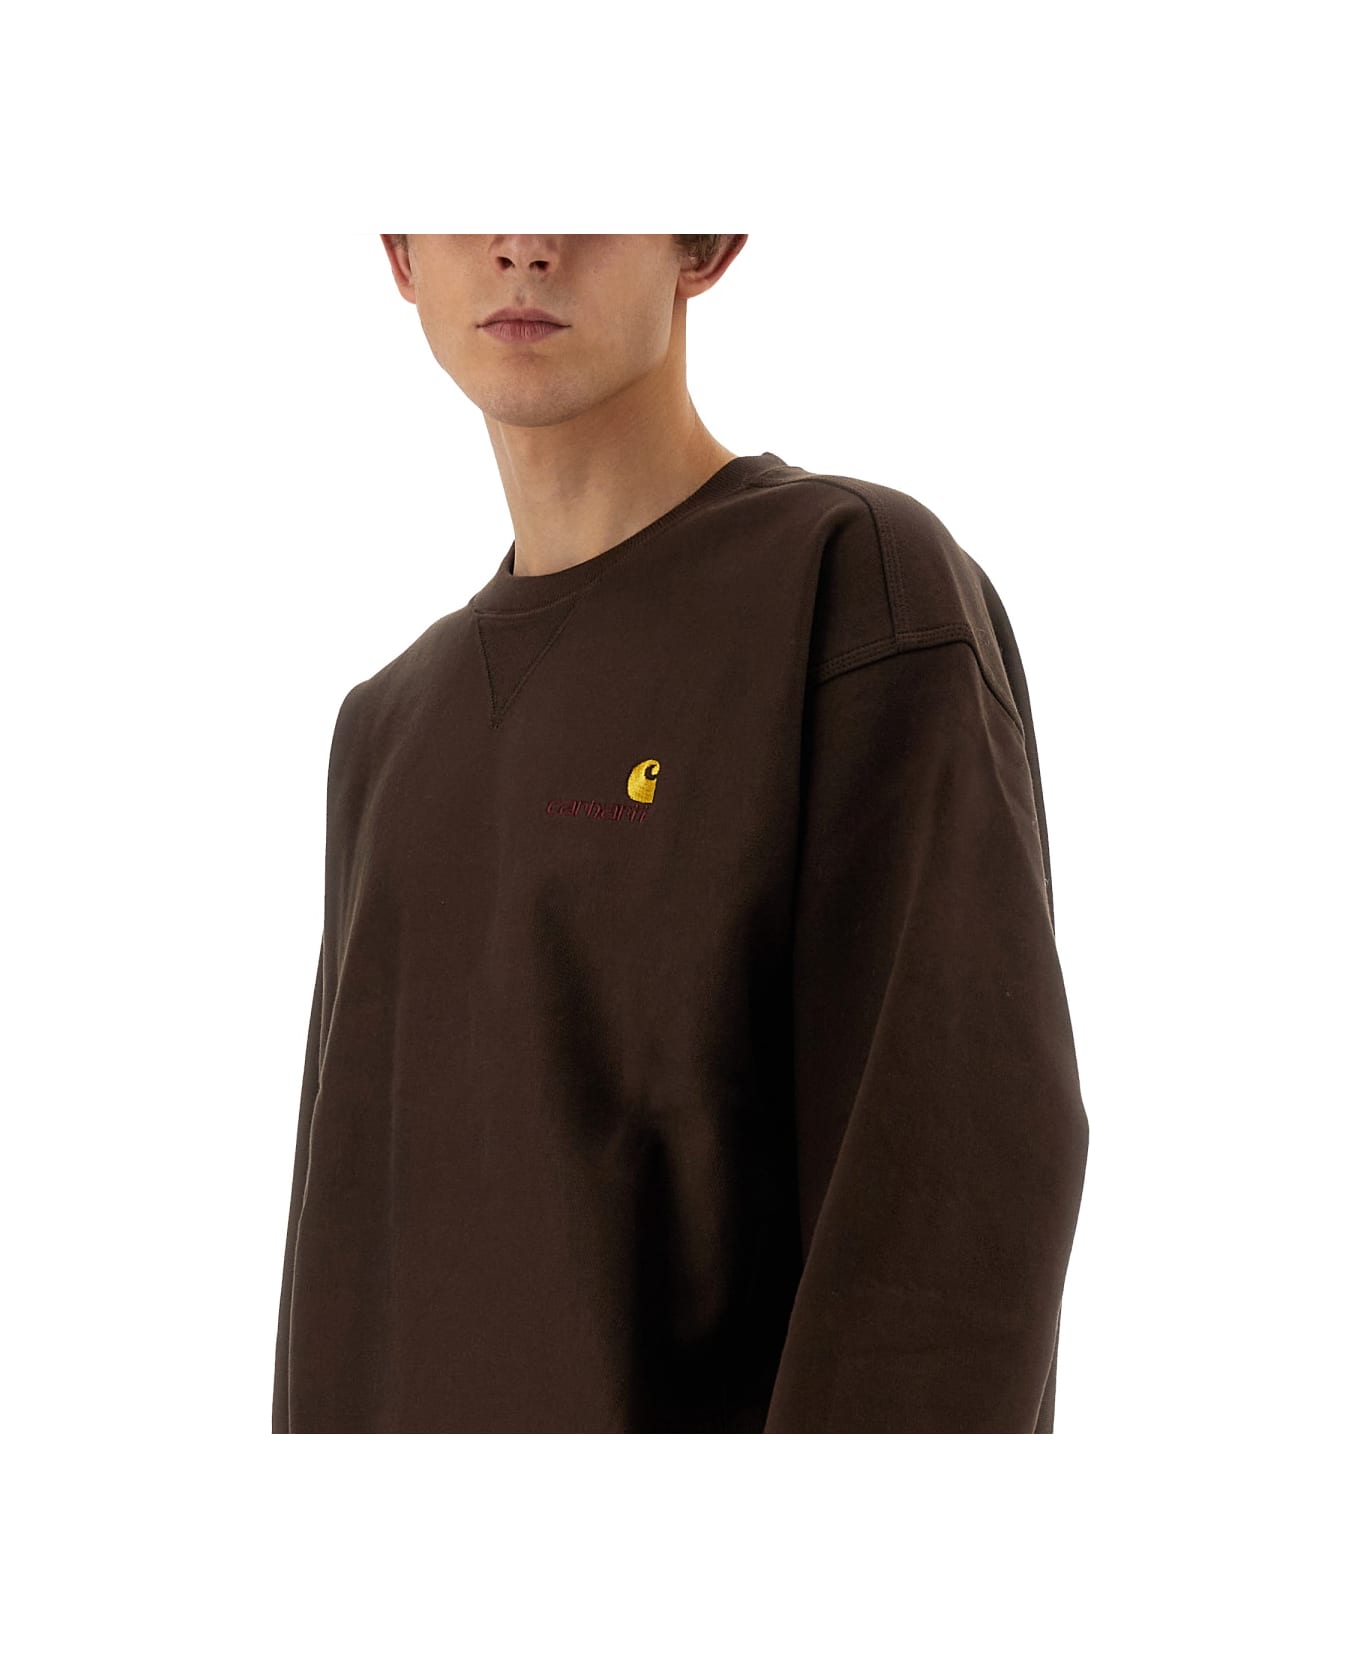 Carhartt Sweatshirt With Logo - BROWN